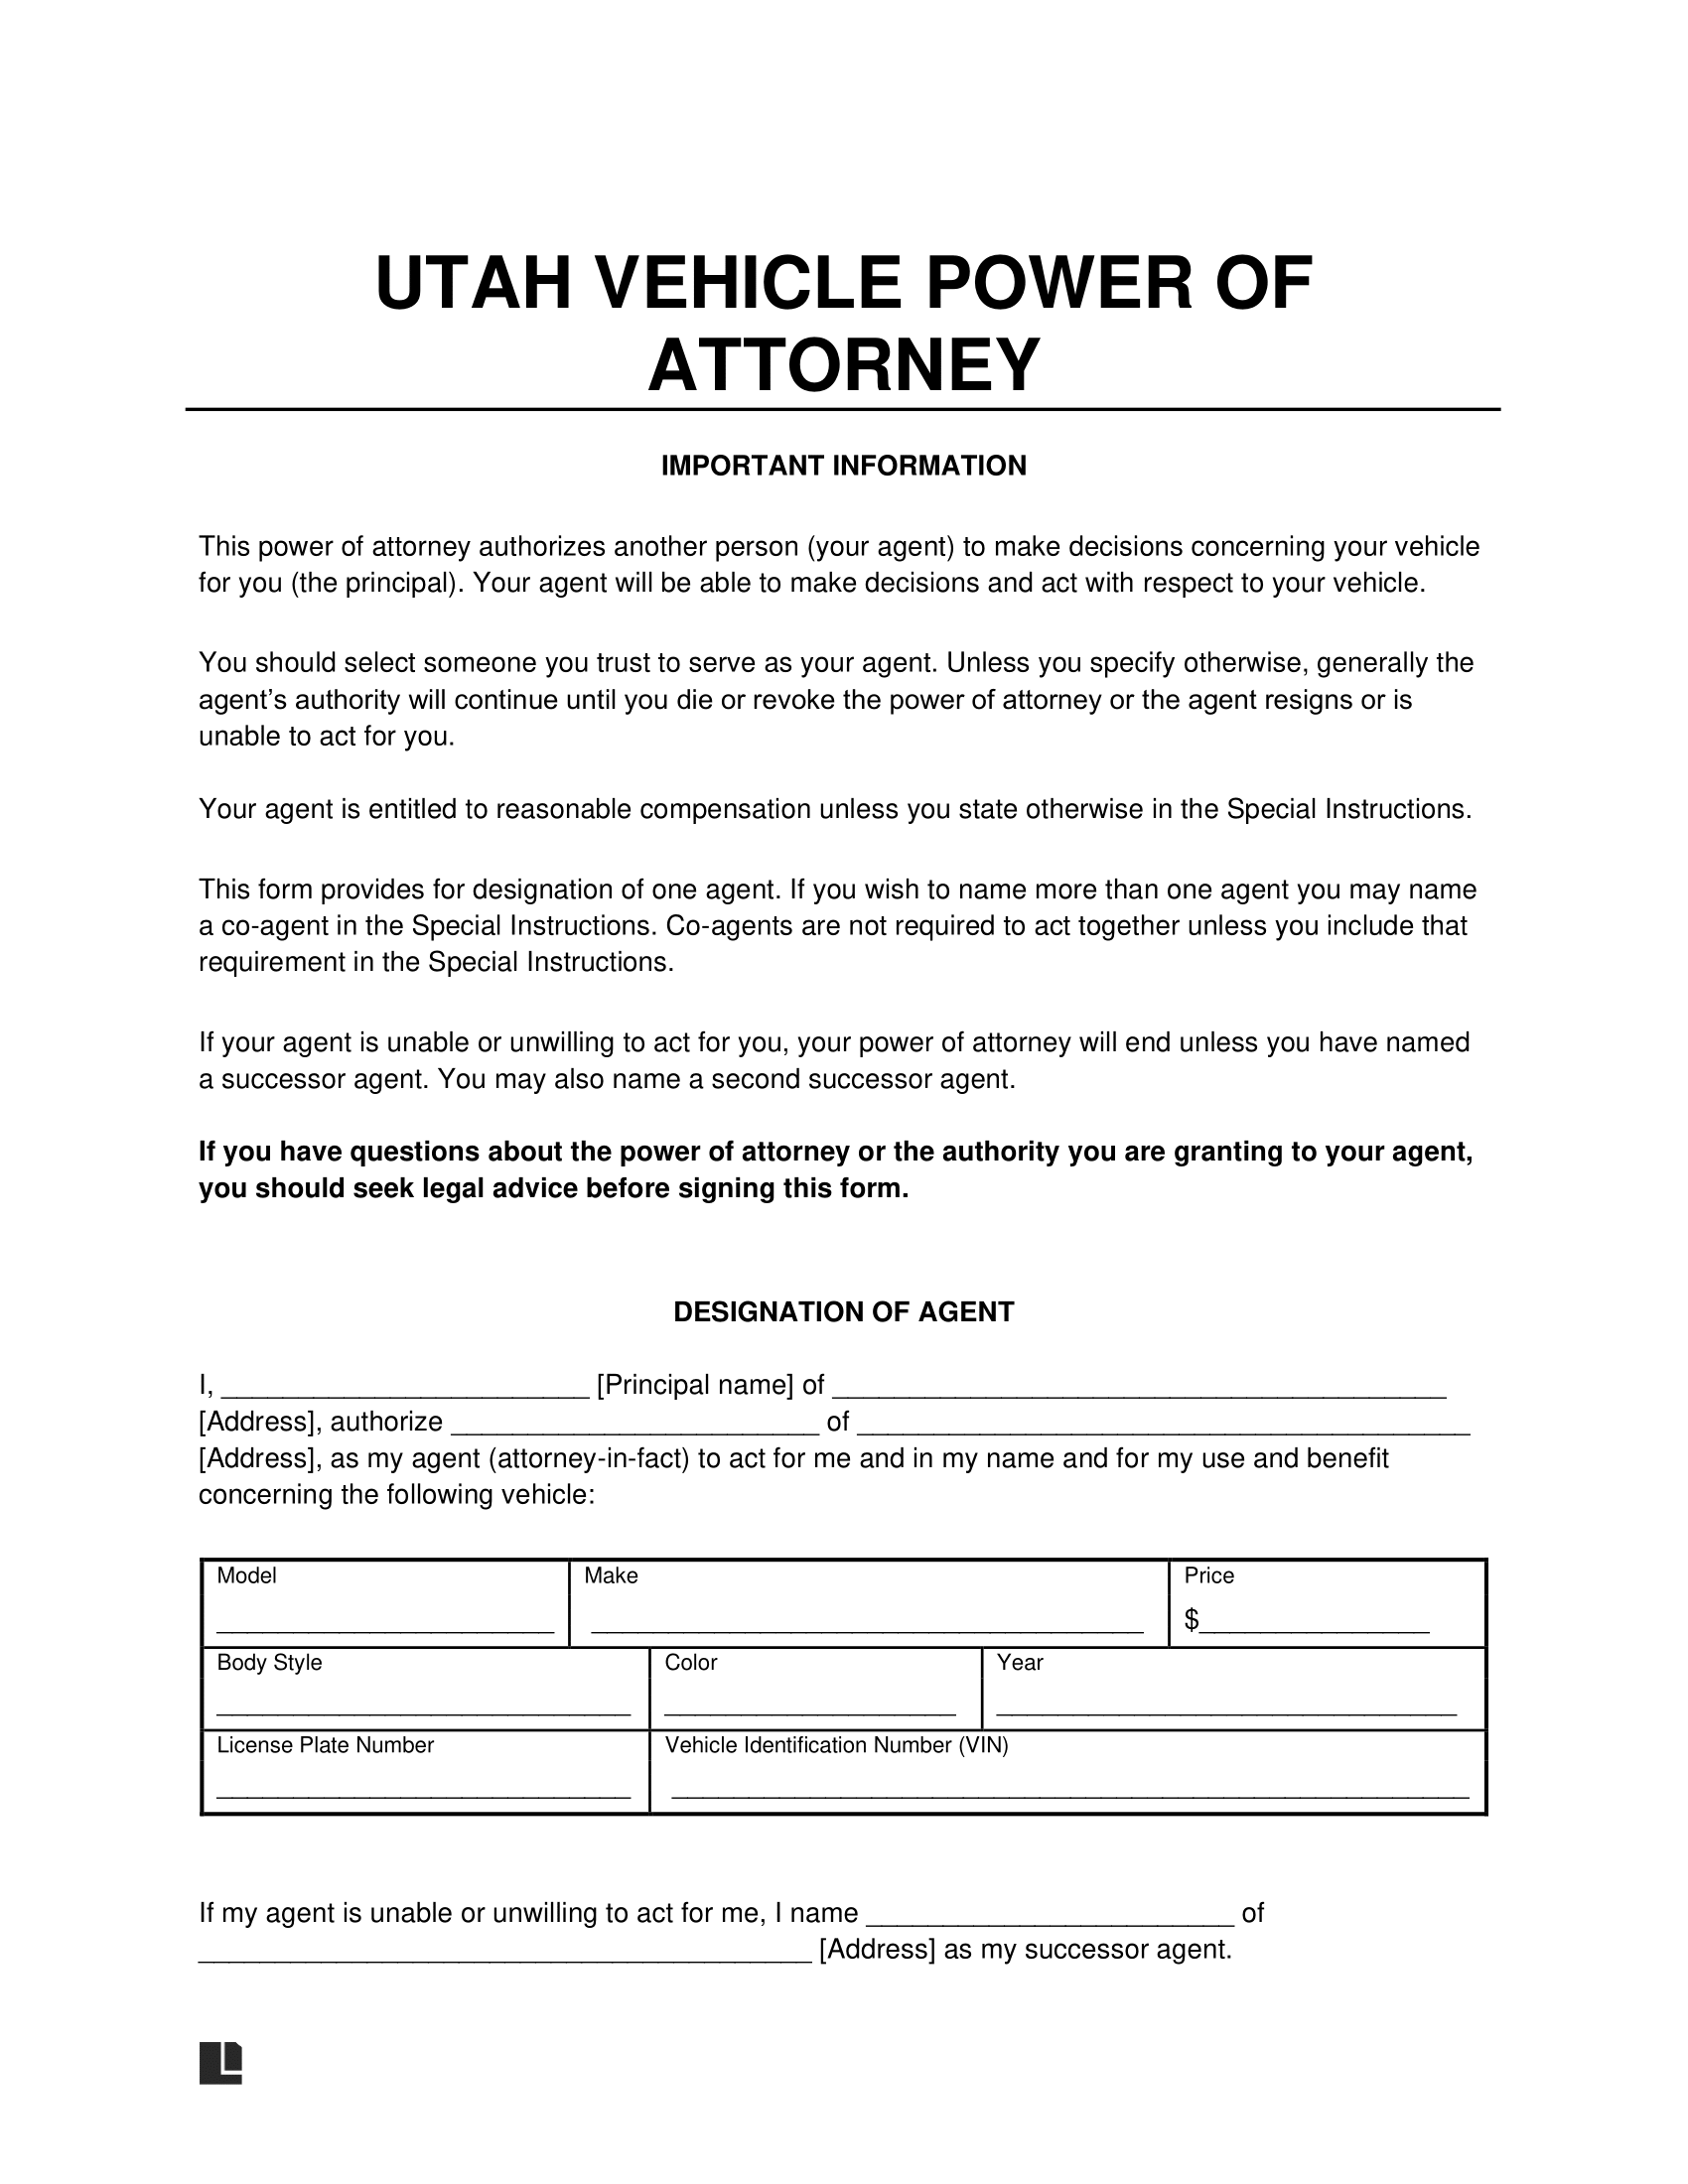 Utah Motor Vehicle Power of Attorney Form